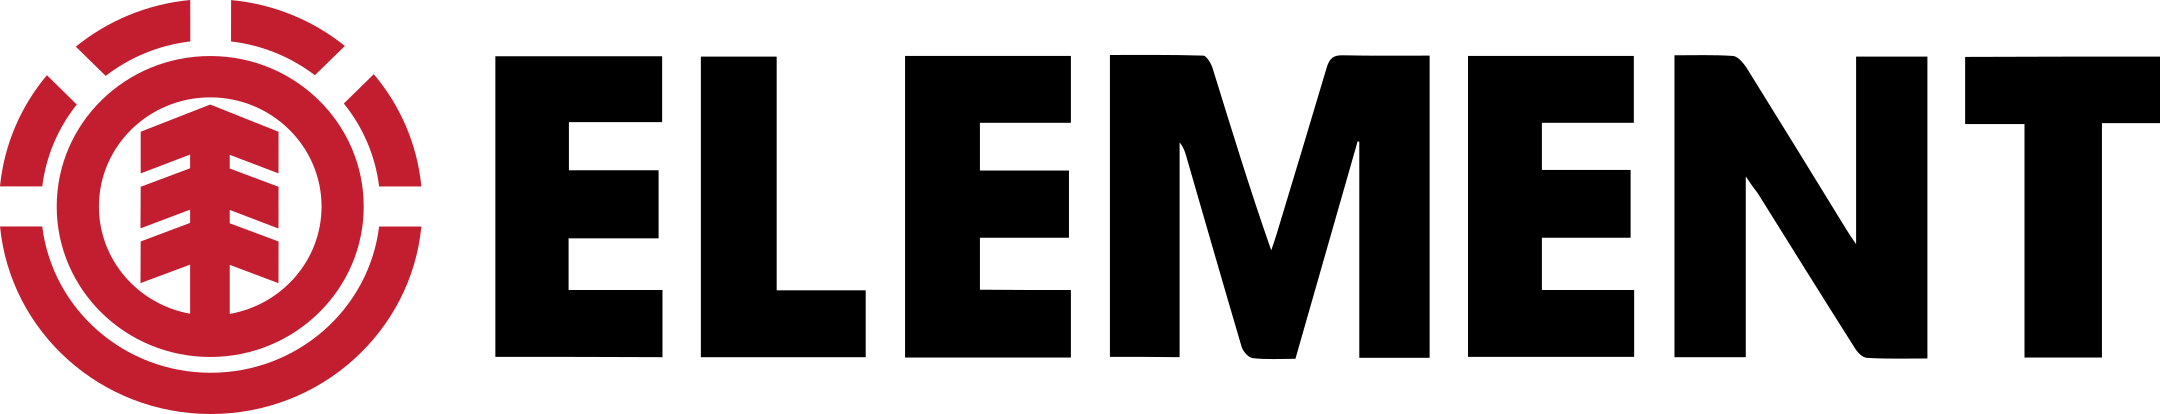 element logo 1 - Element Skateboards Logo